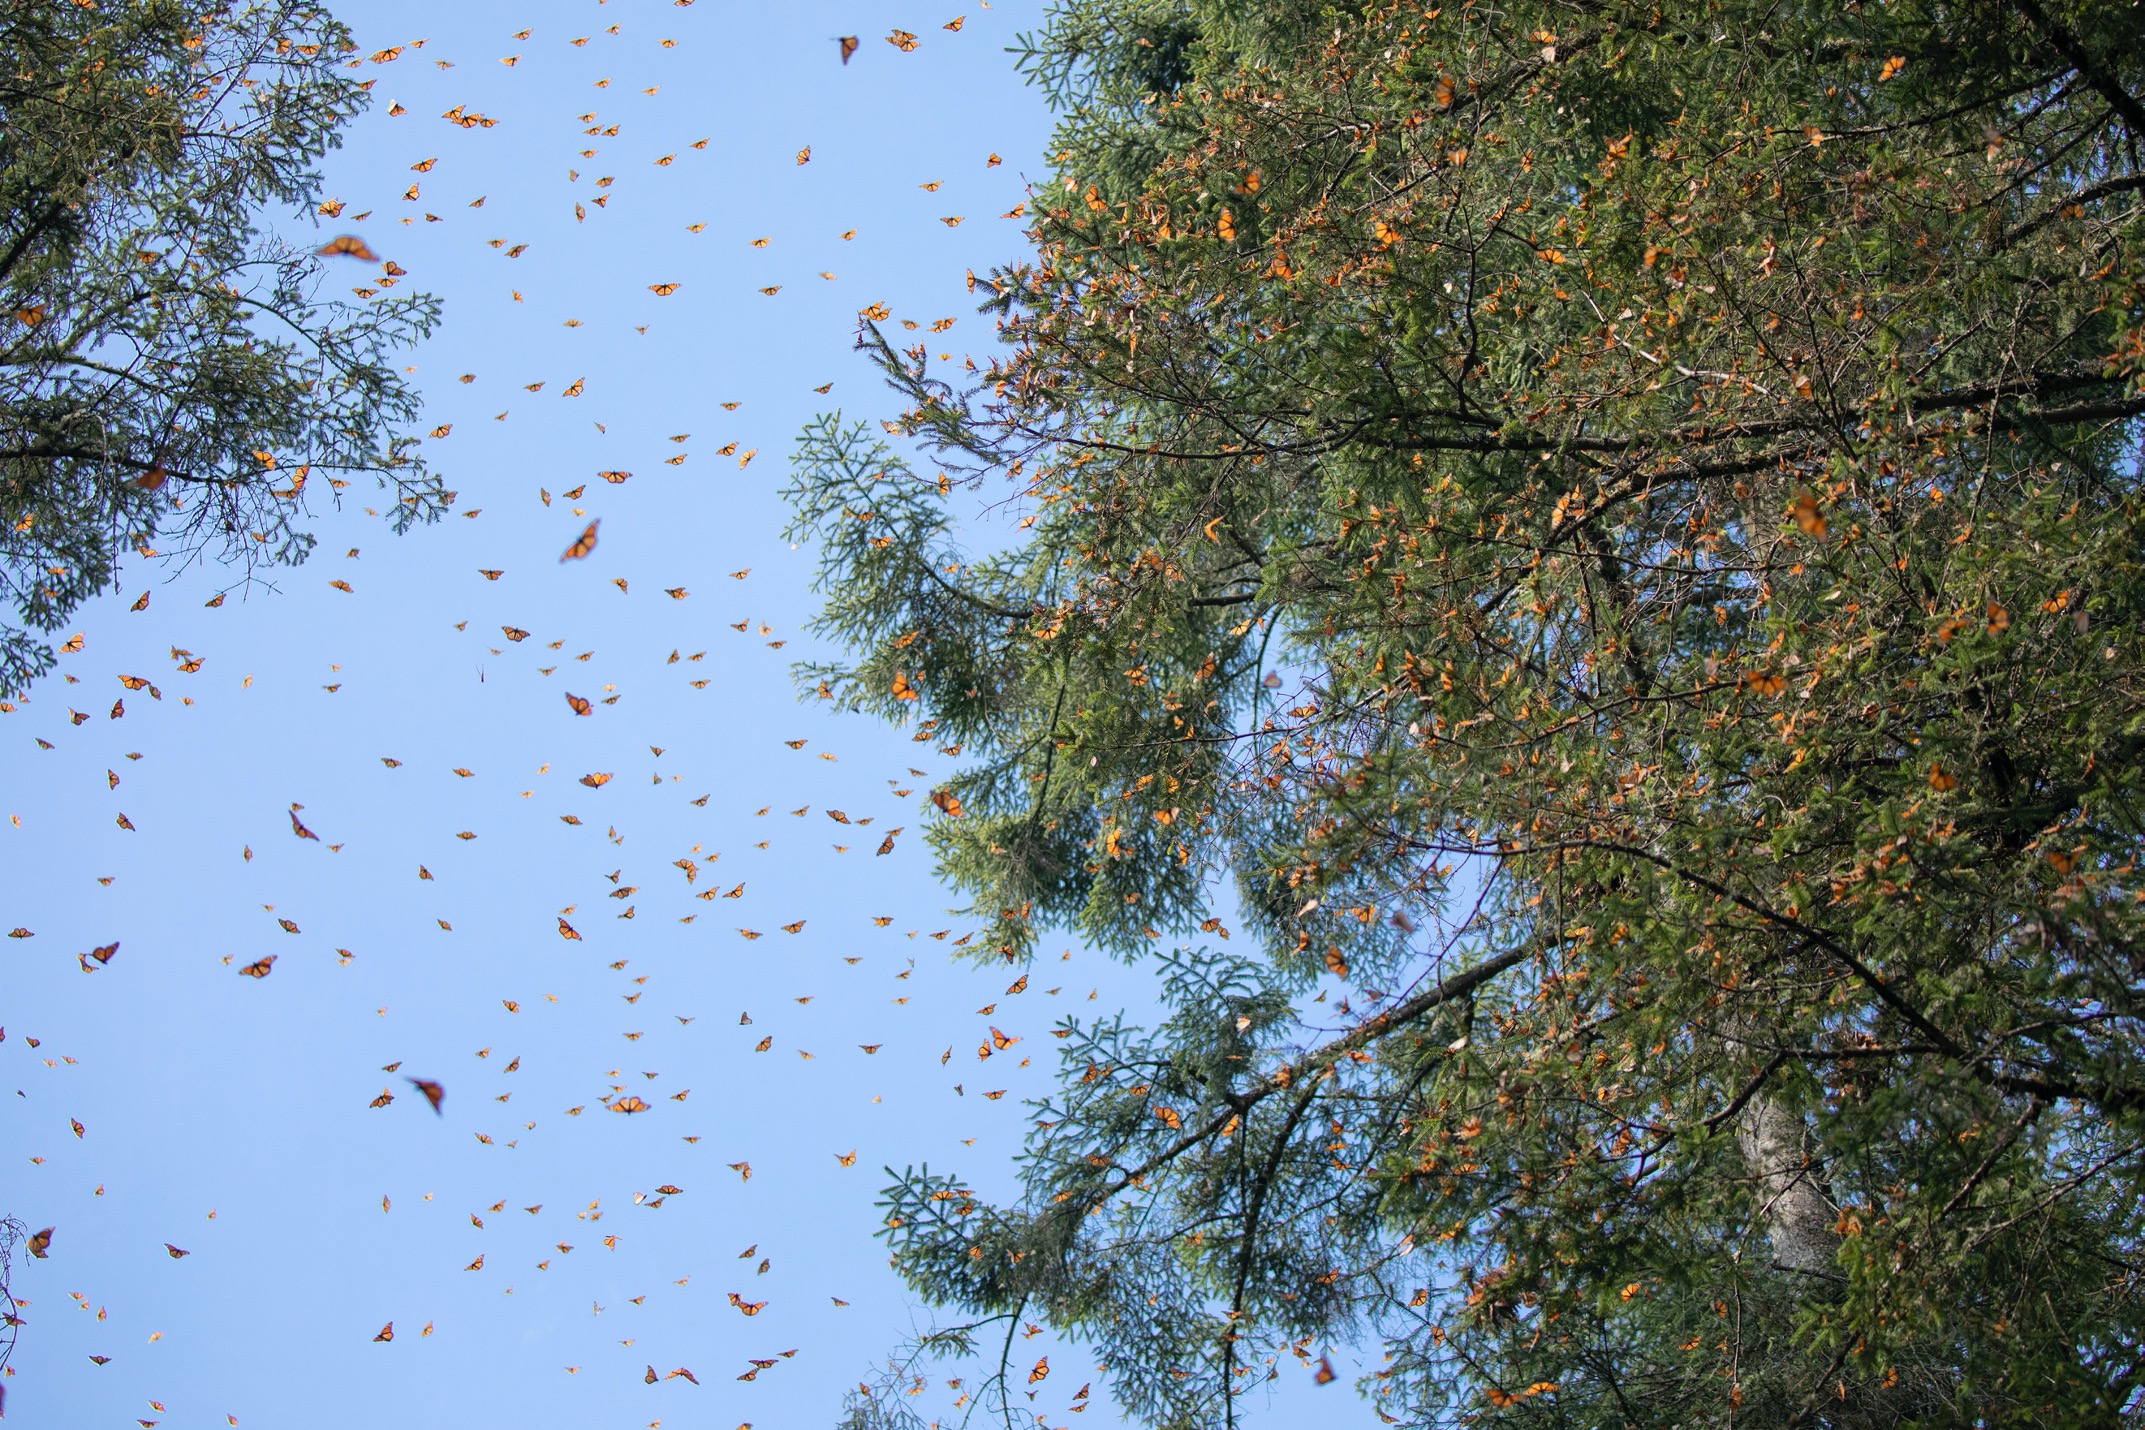 monarchs burst into the air against a blue sky